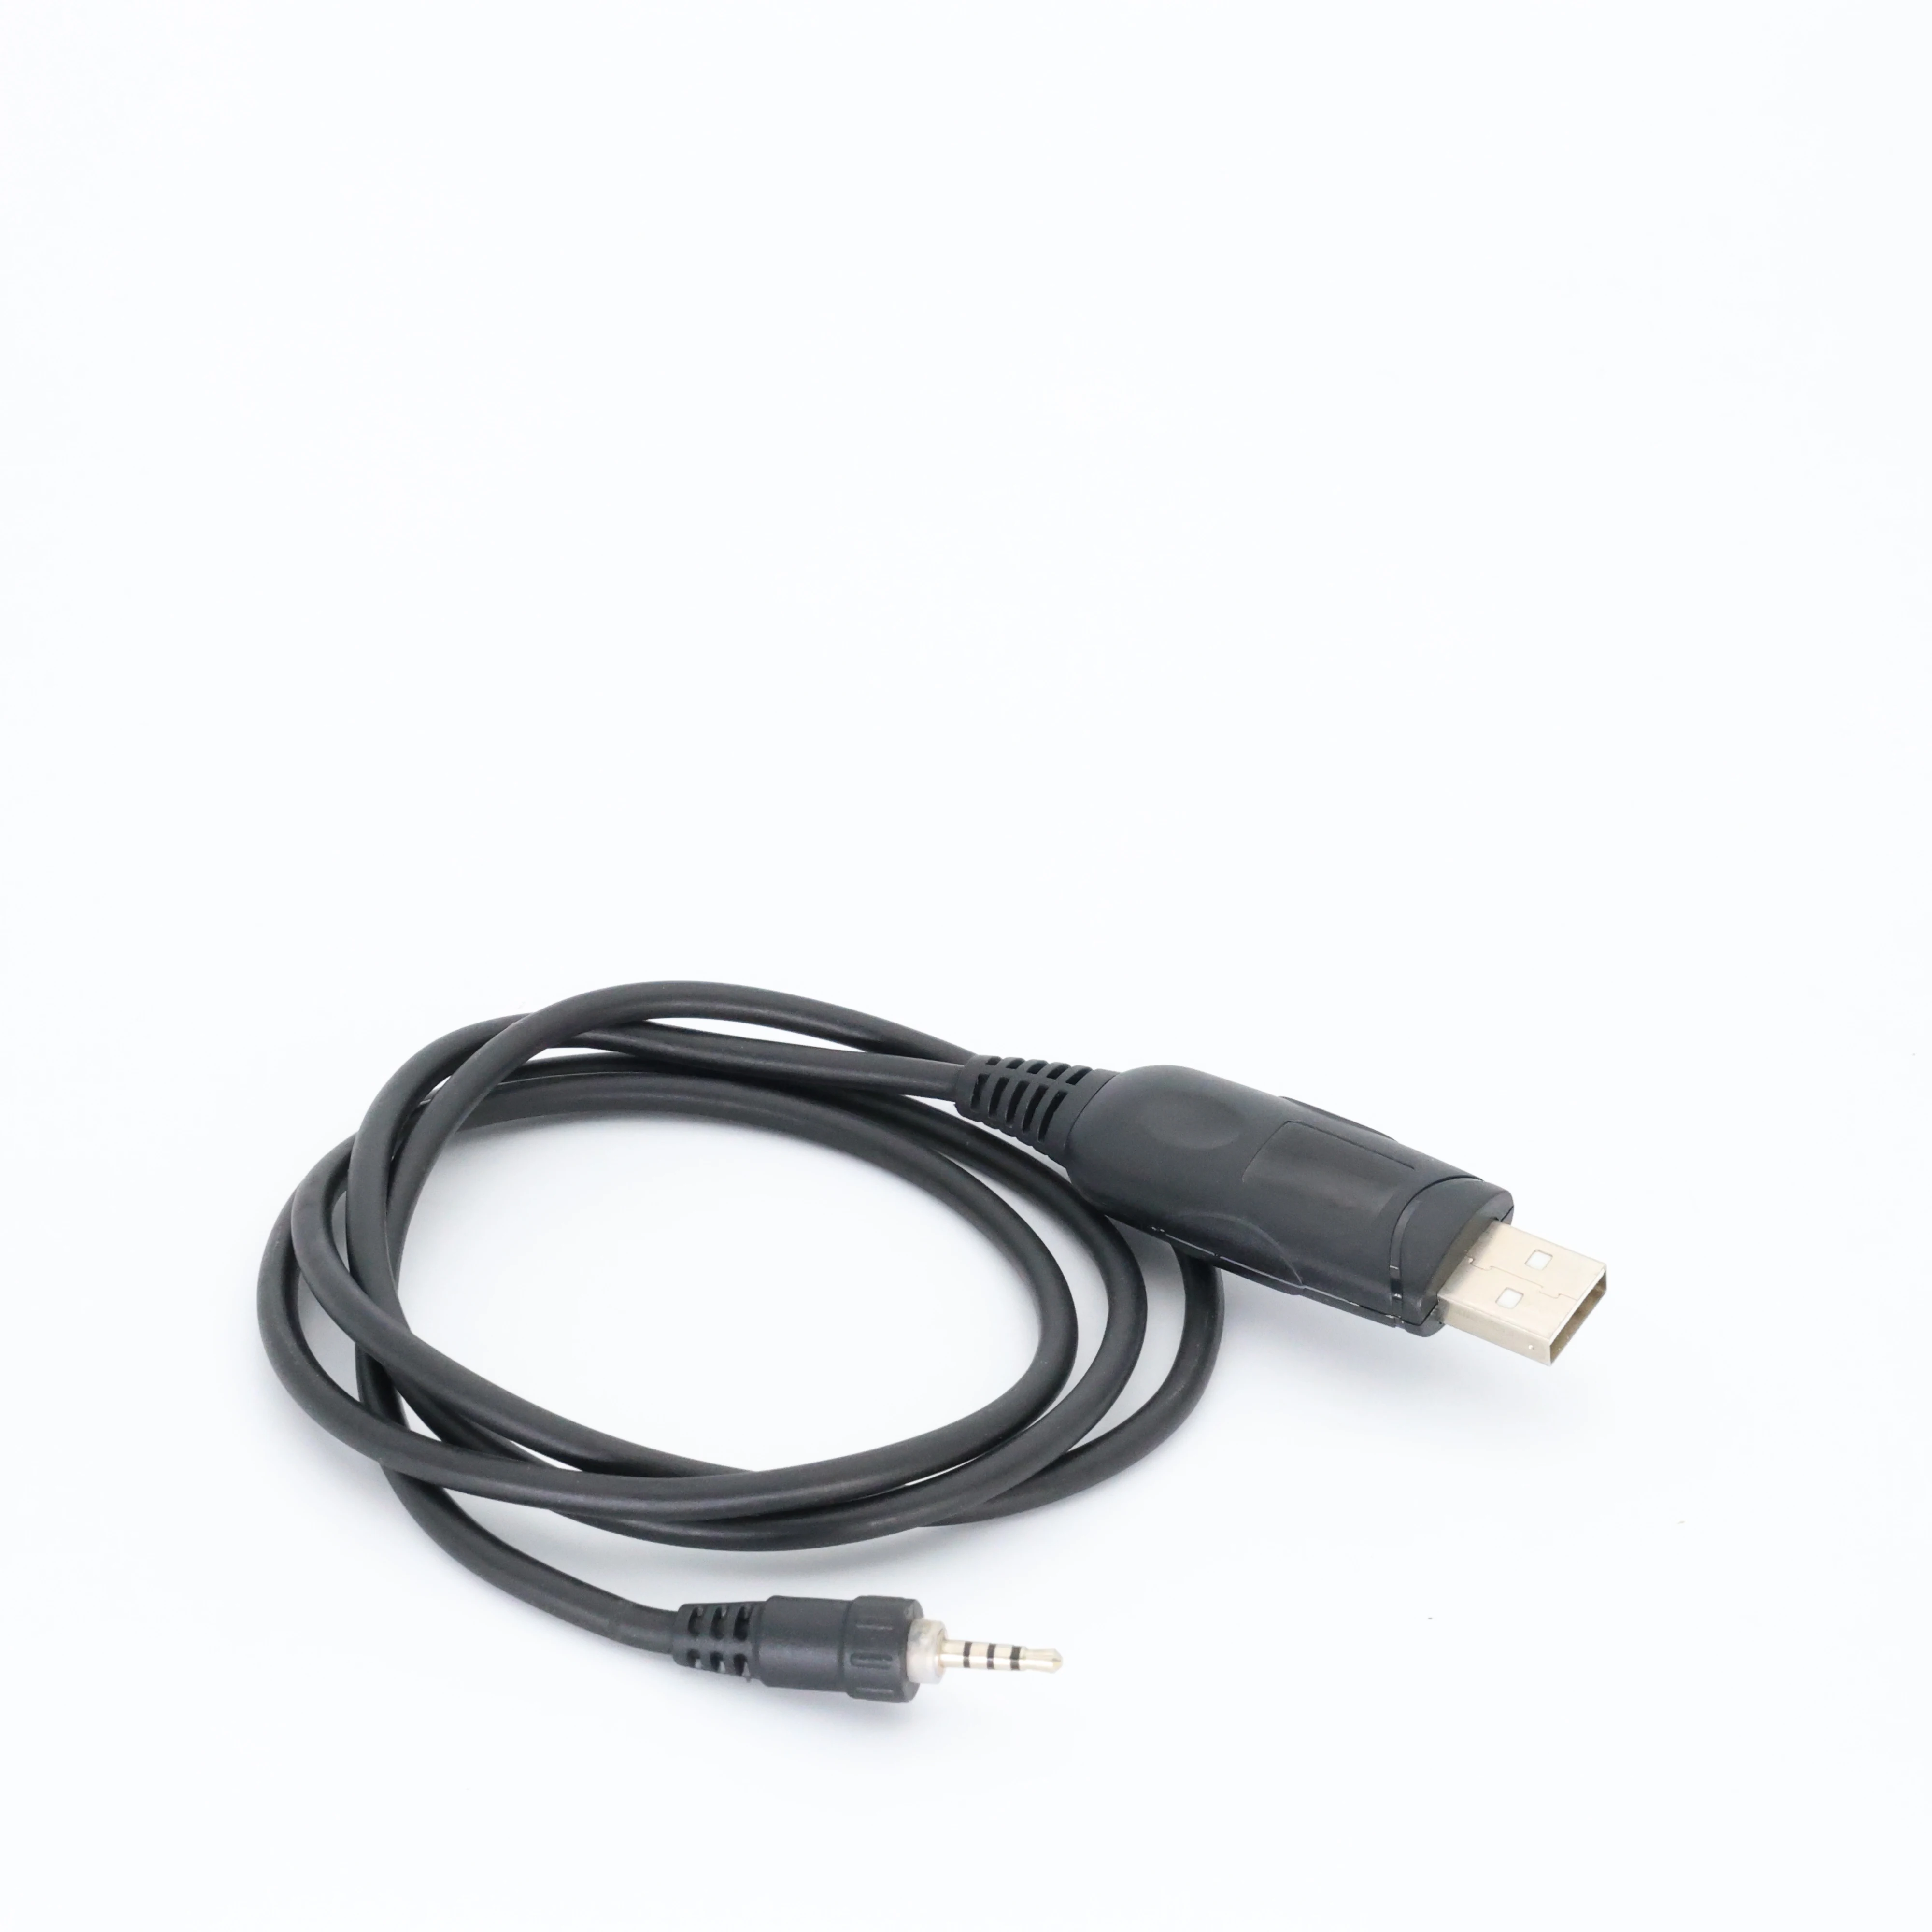 

USB Programming Cable For GX-V1 MINI Walkie Talkie Accessories Handheld Walkie Talkie USB Programming Cables For GX-V1 MINI